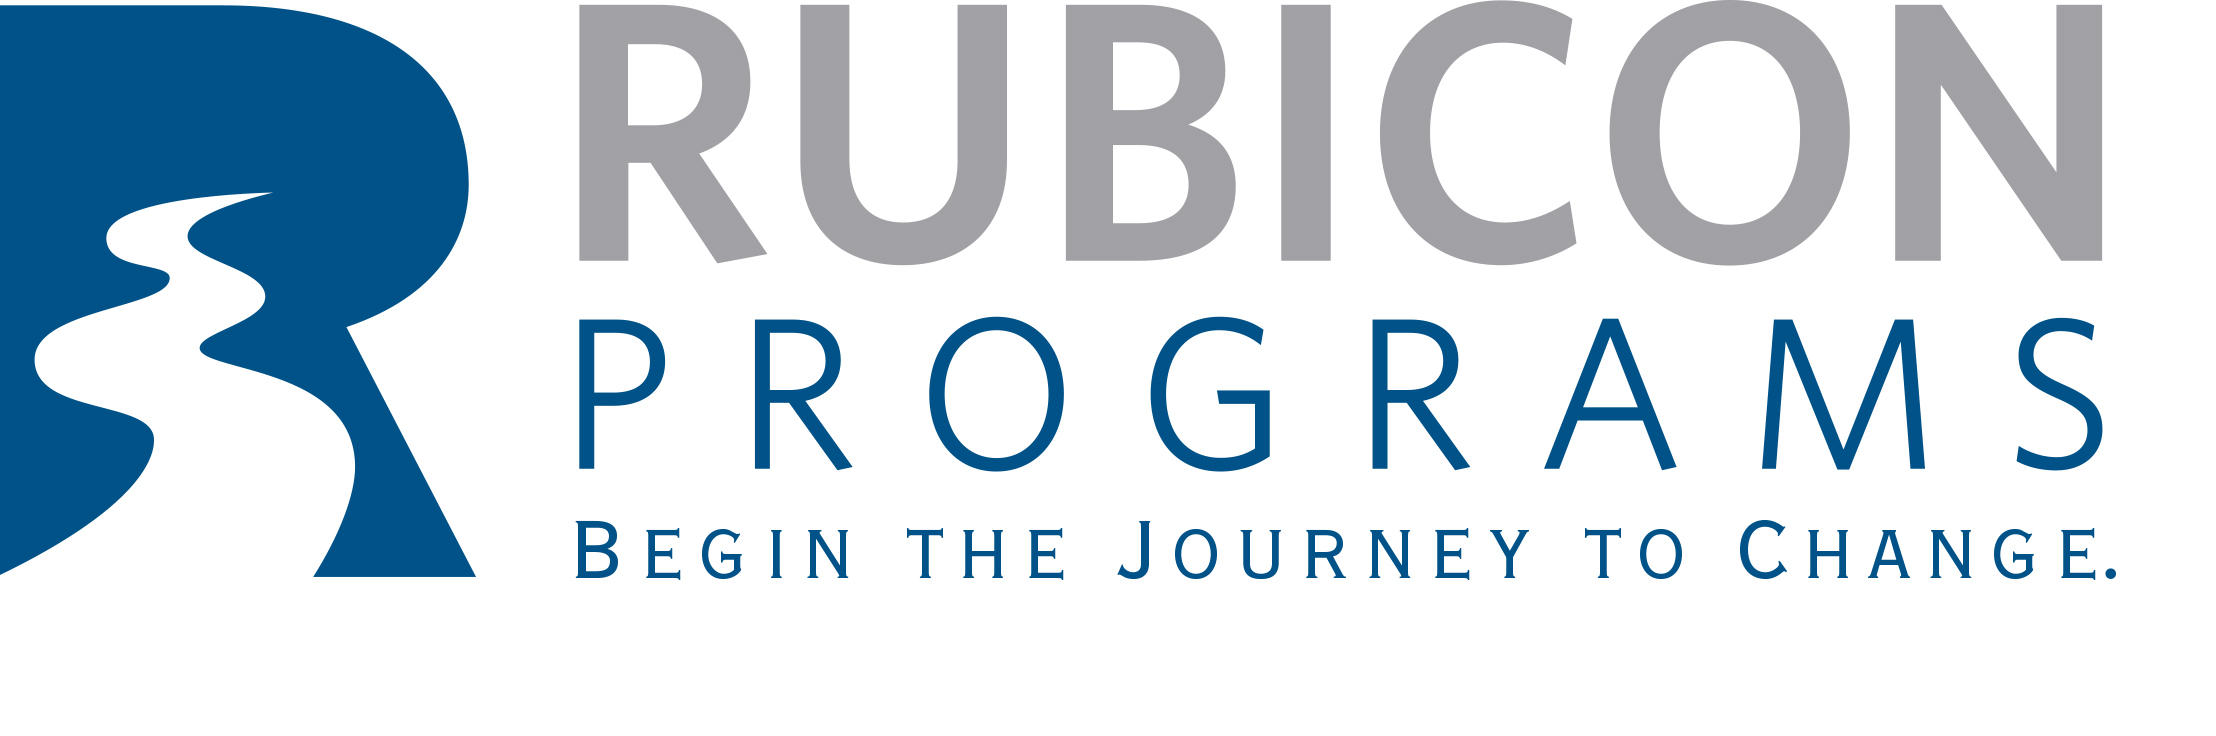 Rubicon Programs - Antioch Girl Talk